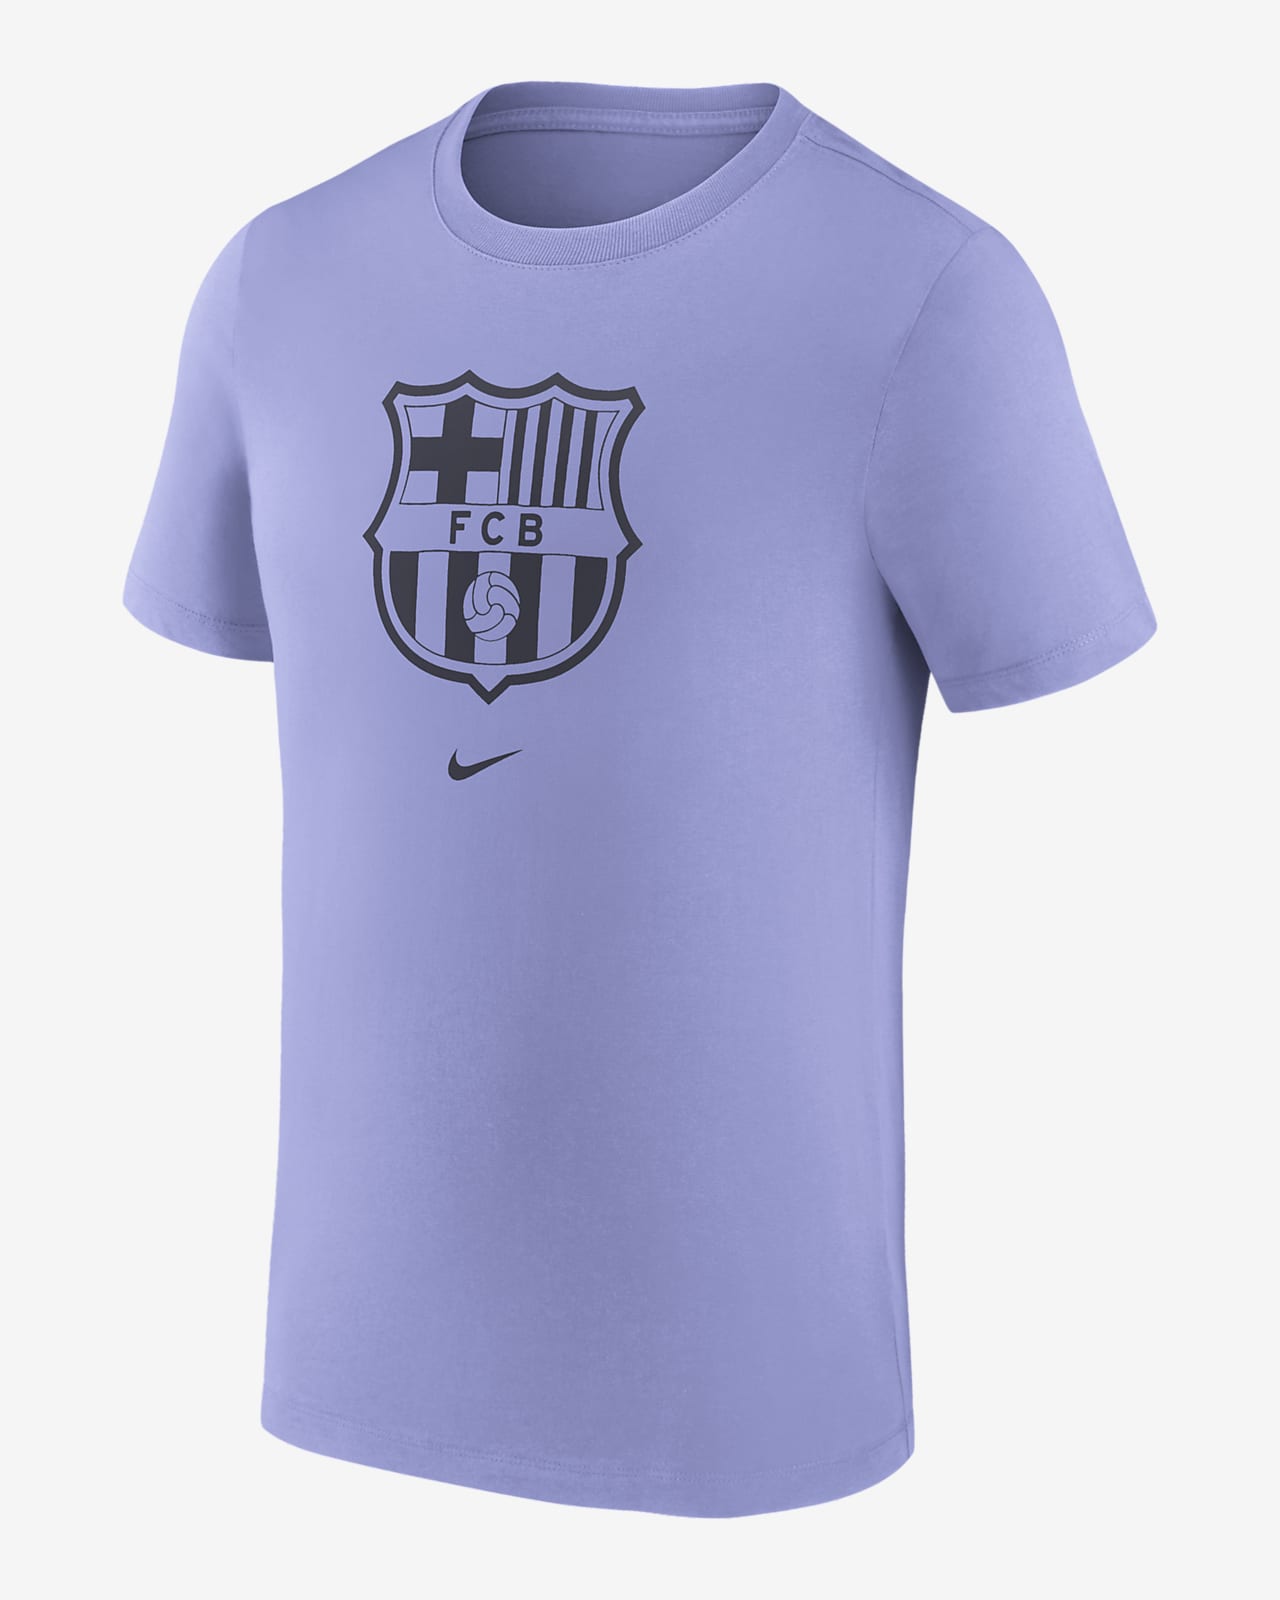 FC Barcelona Men's Nike.com